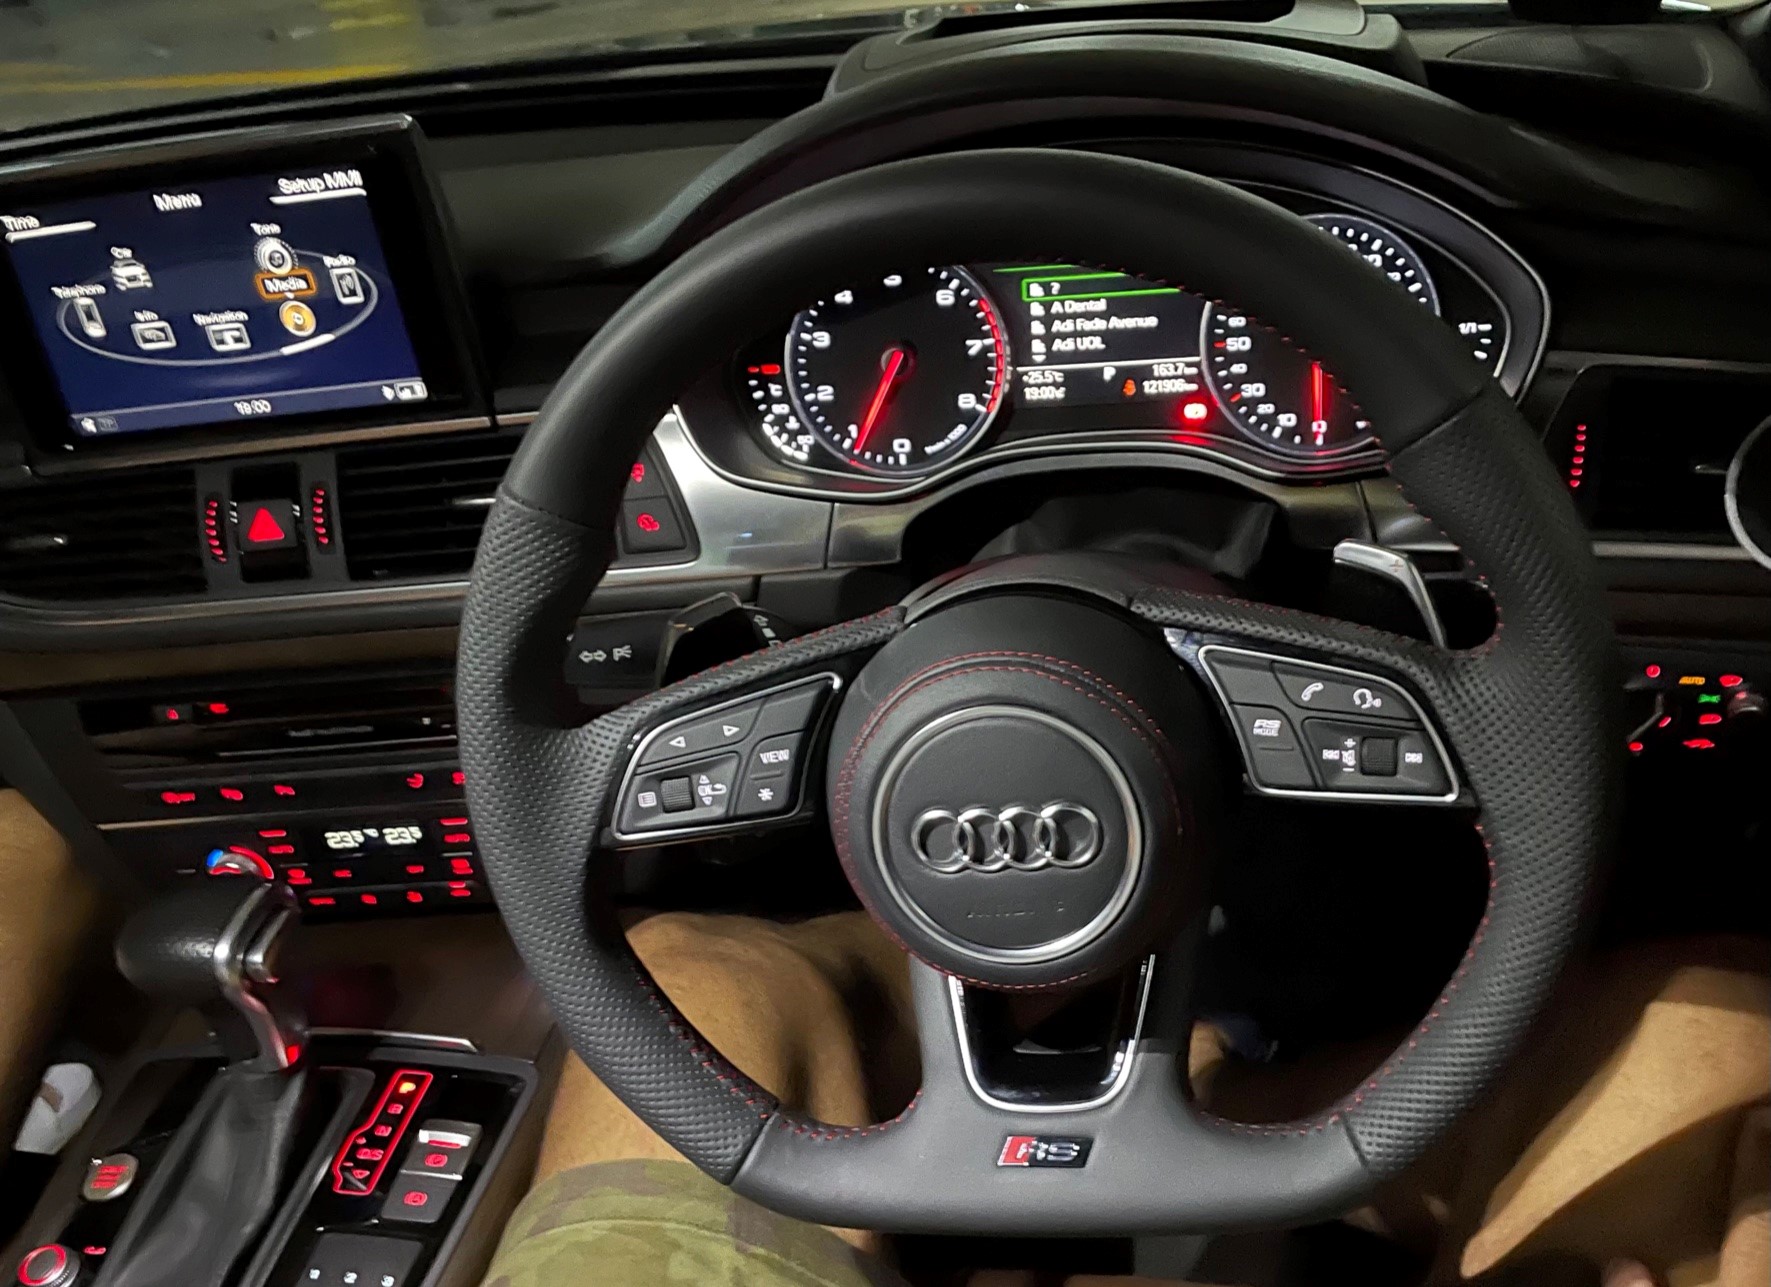 Modhub Steering Wheels - Audi A6 C7